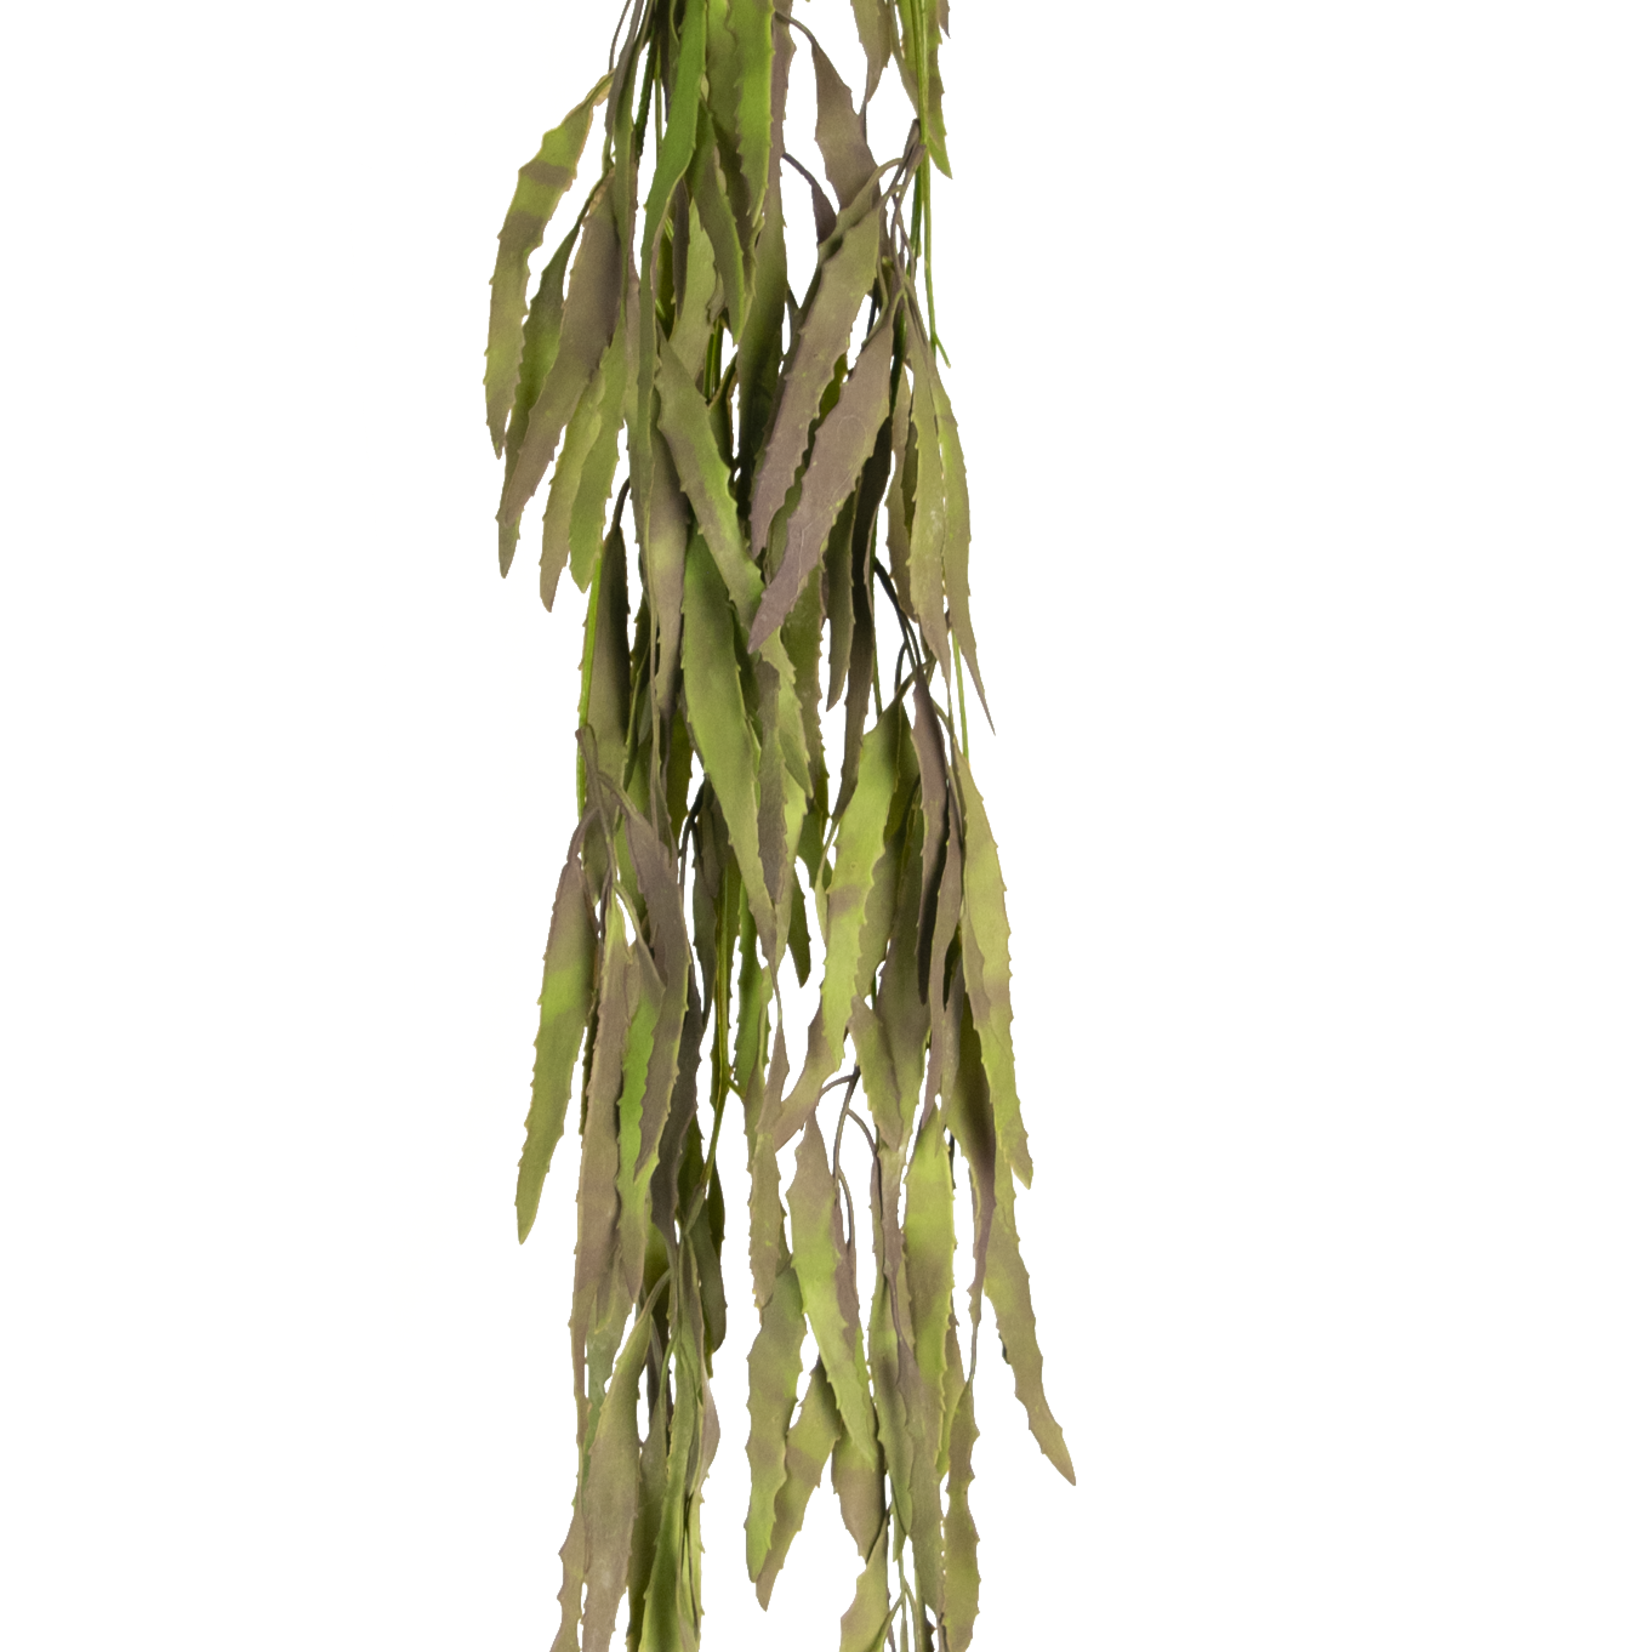 Greenmoods Kunst hangplant Aloe Vera 102 cm